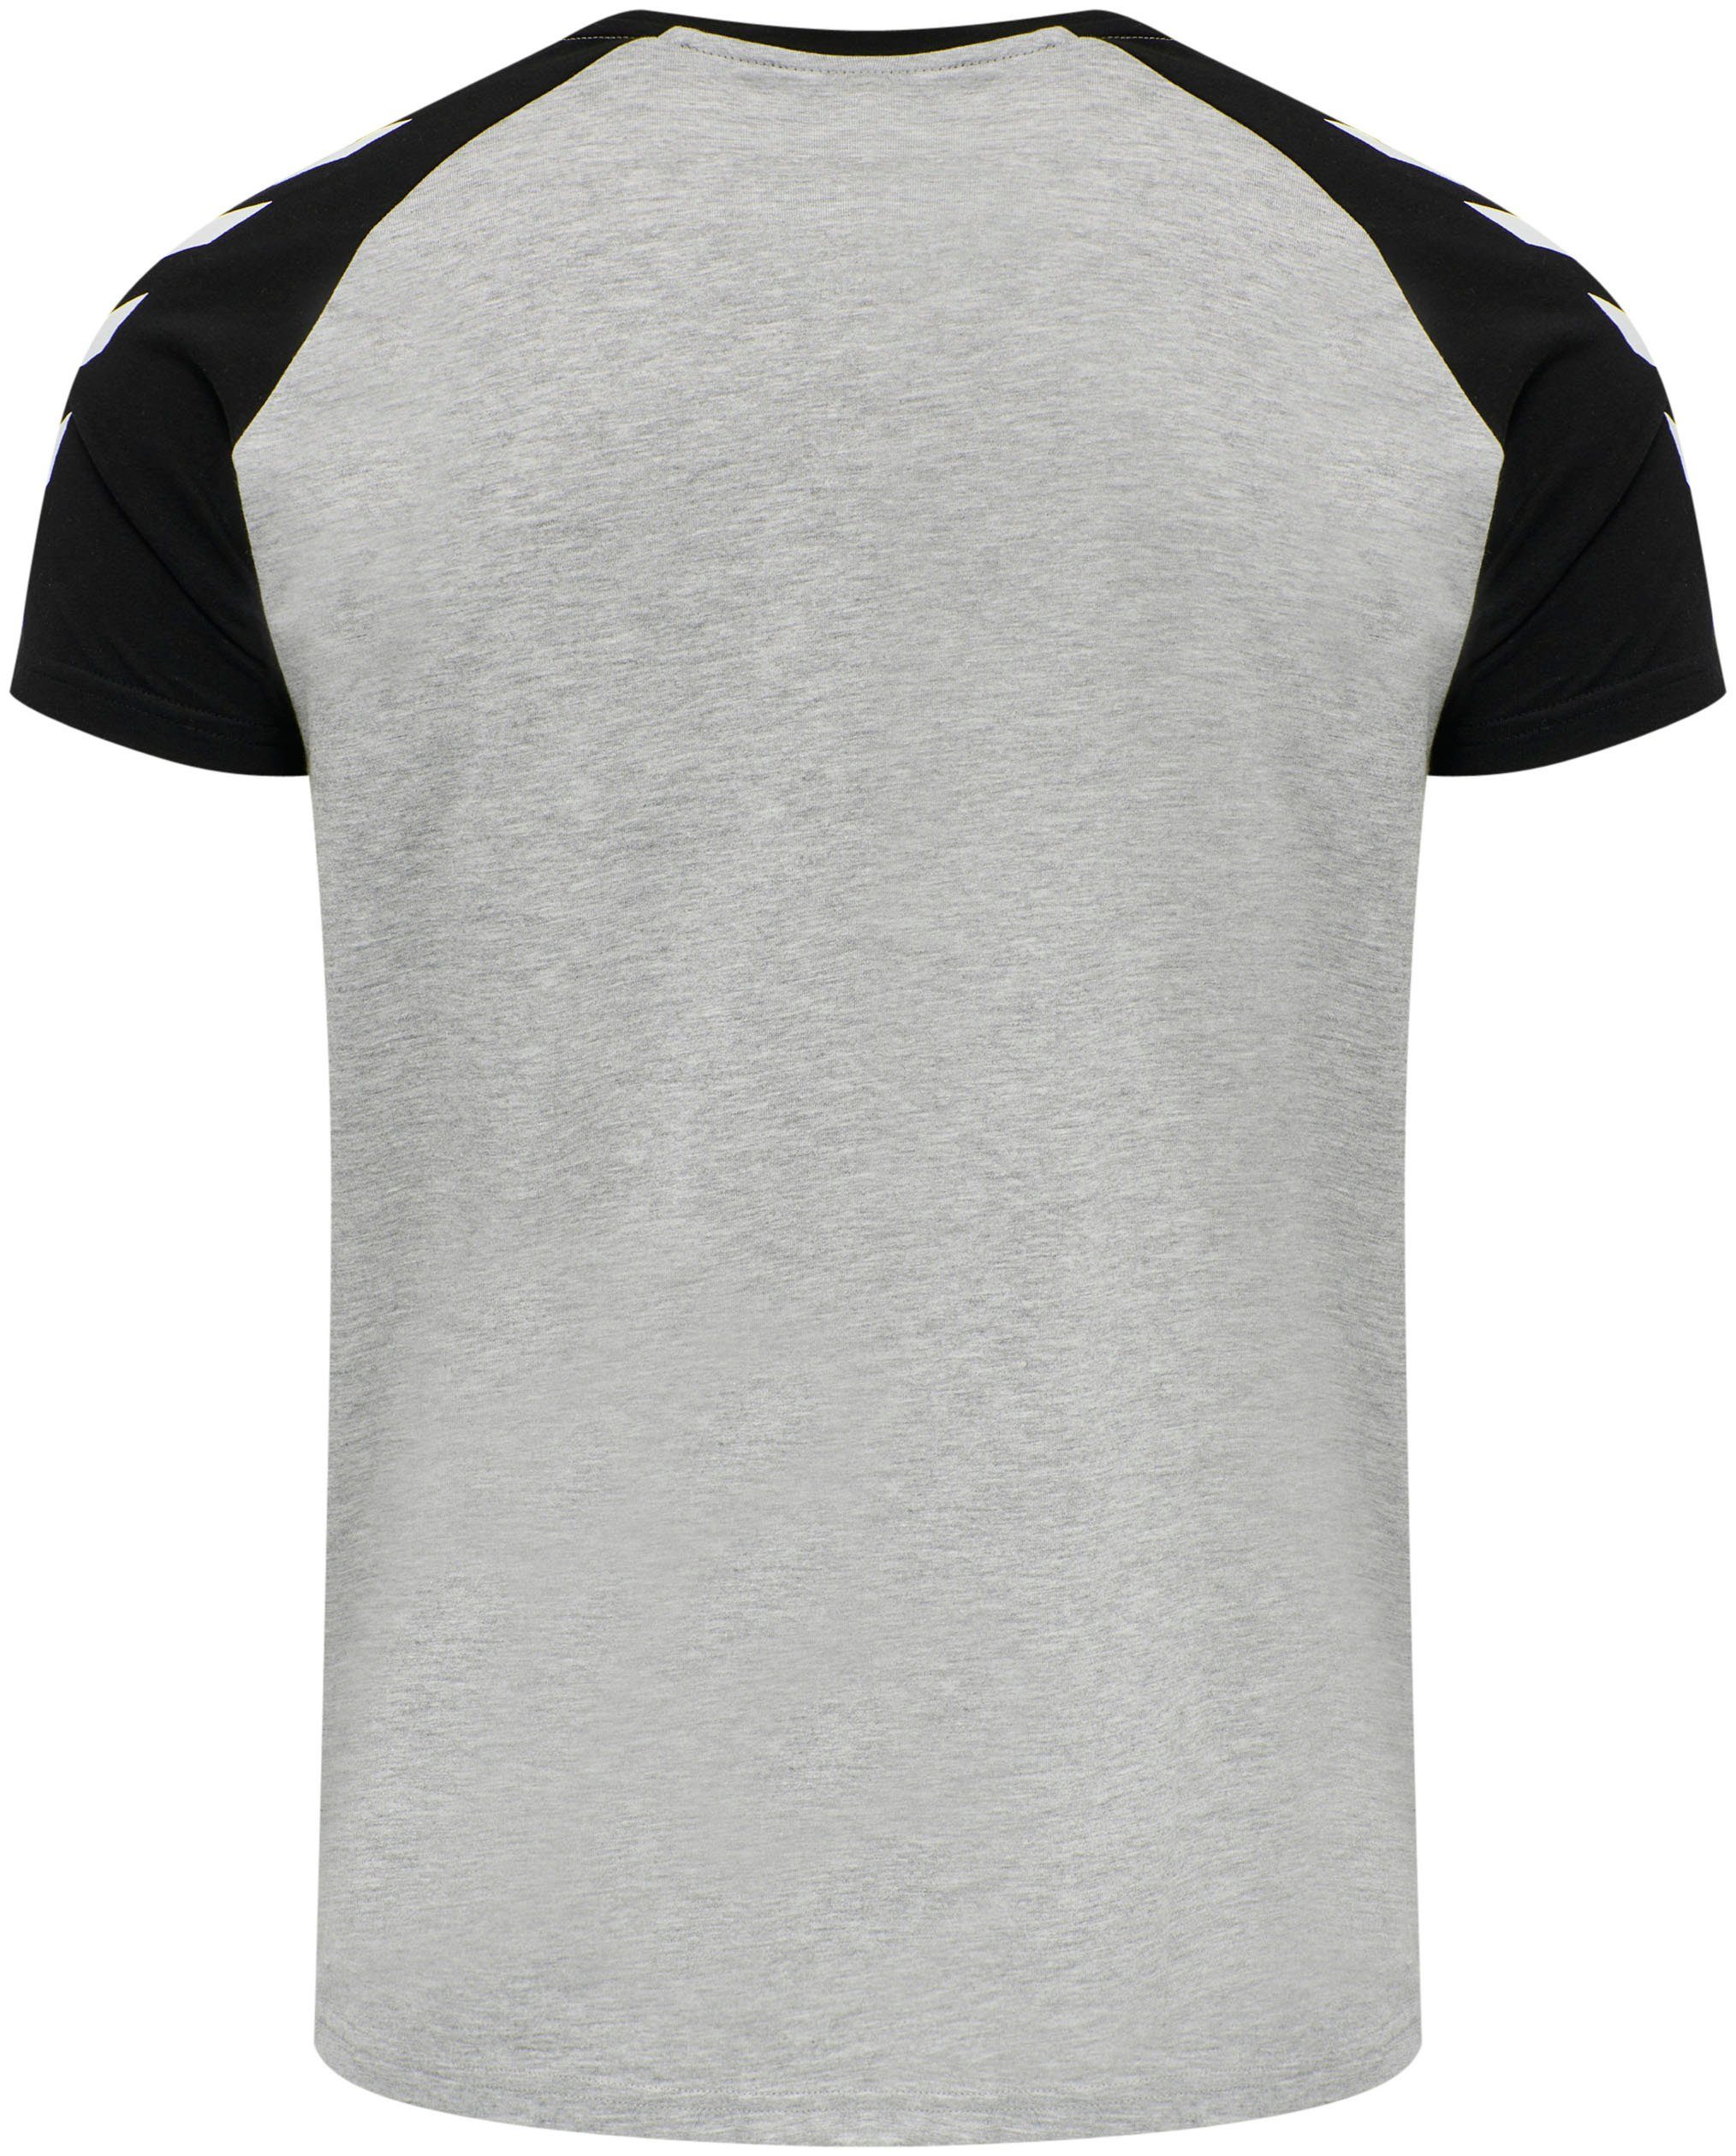 T-Shirt grau-schwarz hummel